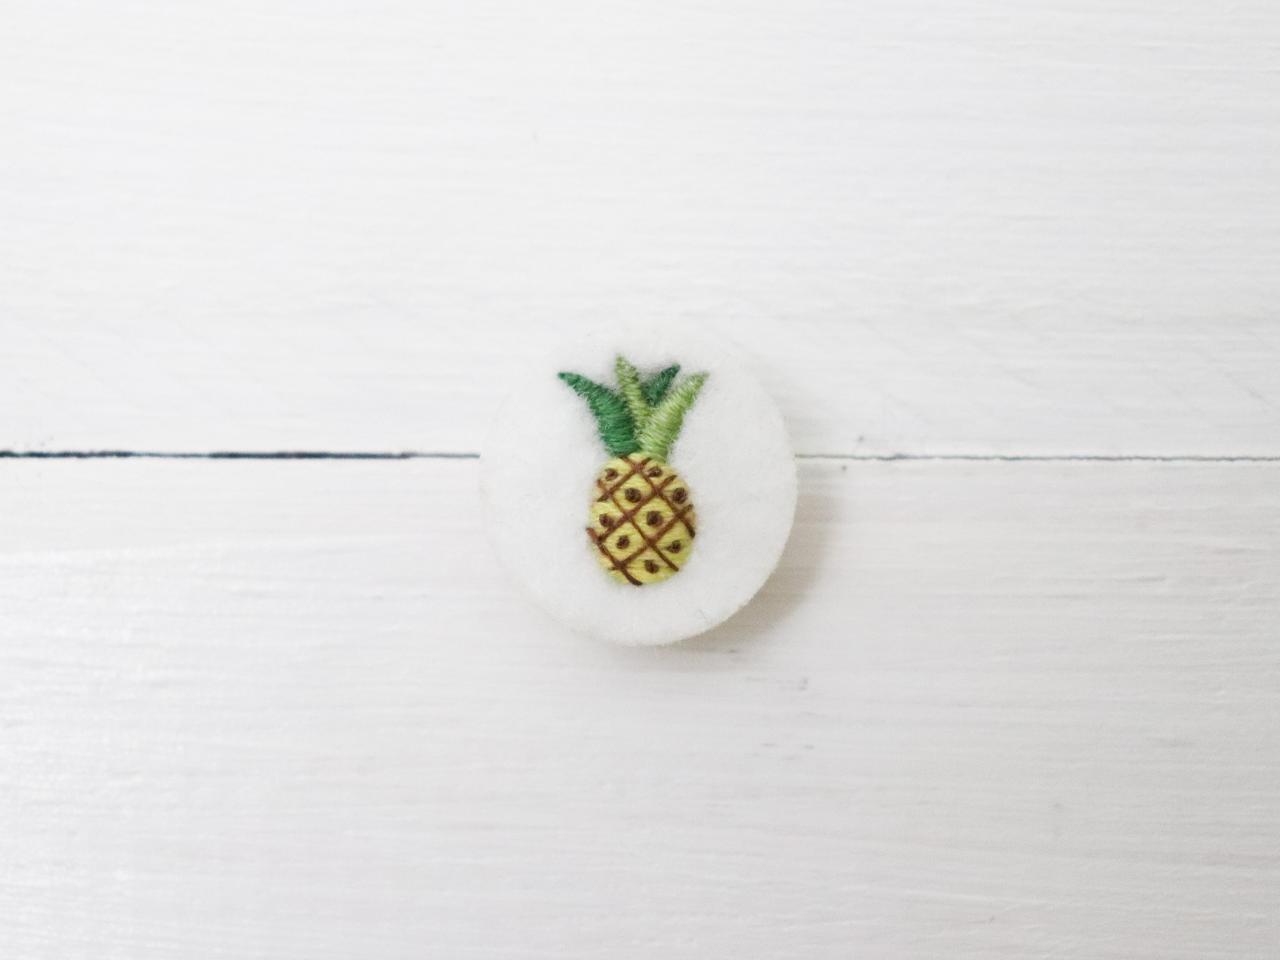 Miniature Embroidery Pin Pineapple Brooch Pineapple Pin Embroidery Pin Hand Embroidery Embroidered Pin Pineapple Felt Brooch Fruit Jewelry